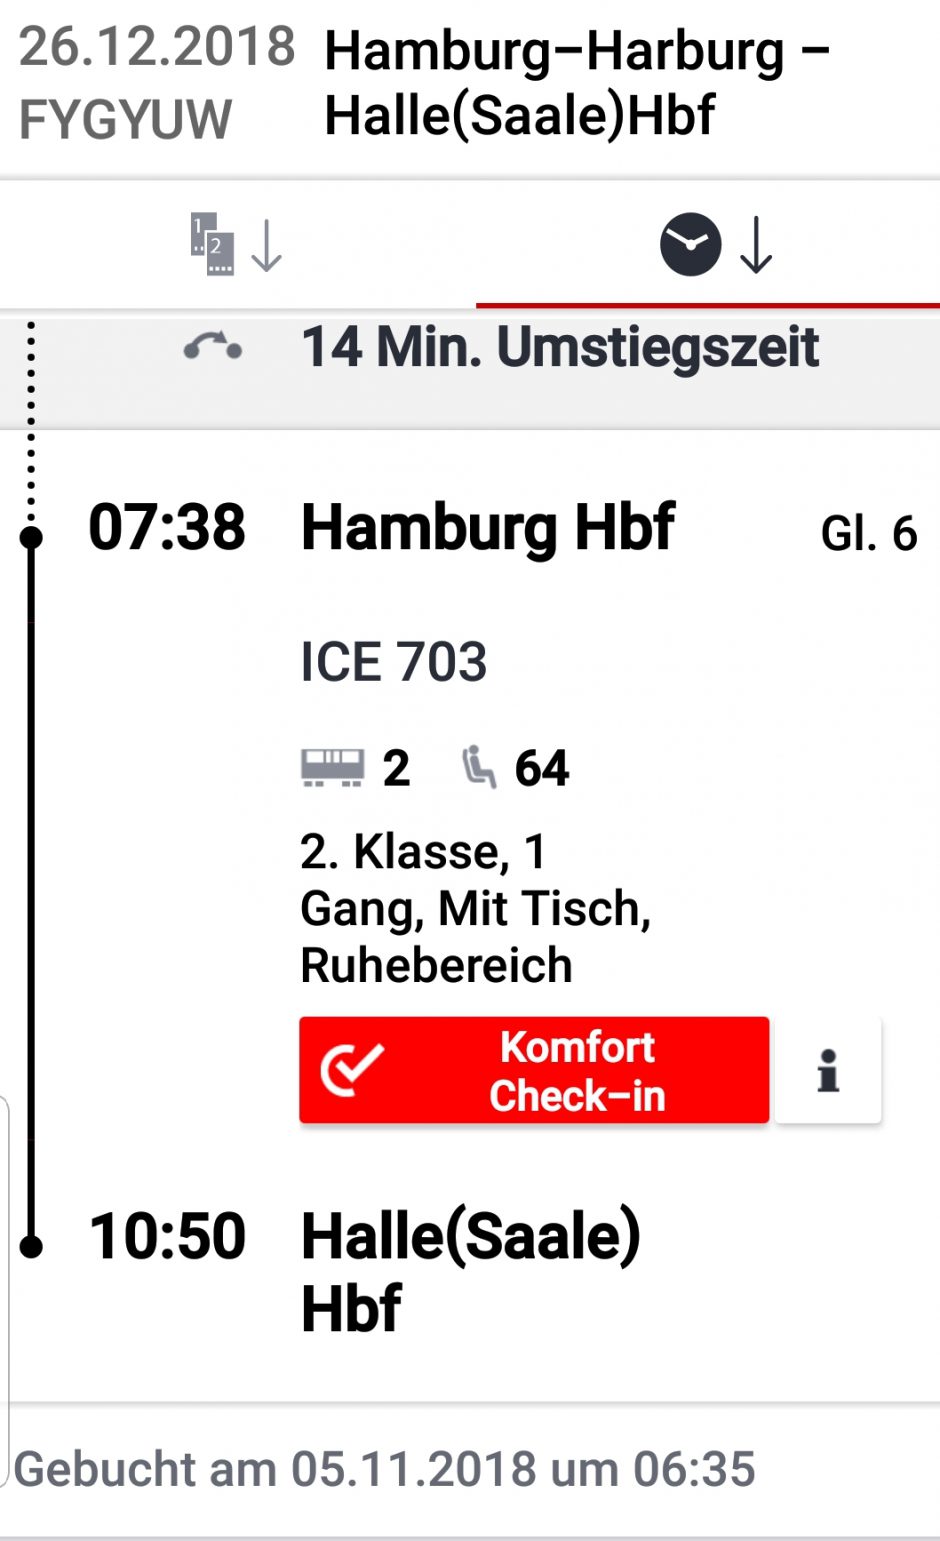 Fahrtverlauf laut Ticket (Screenshot DB-App)